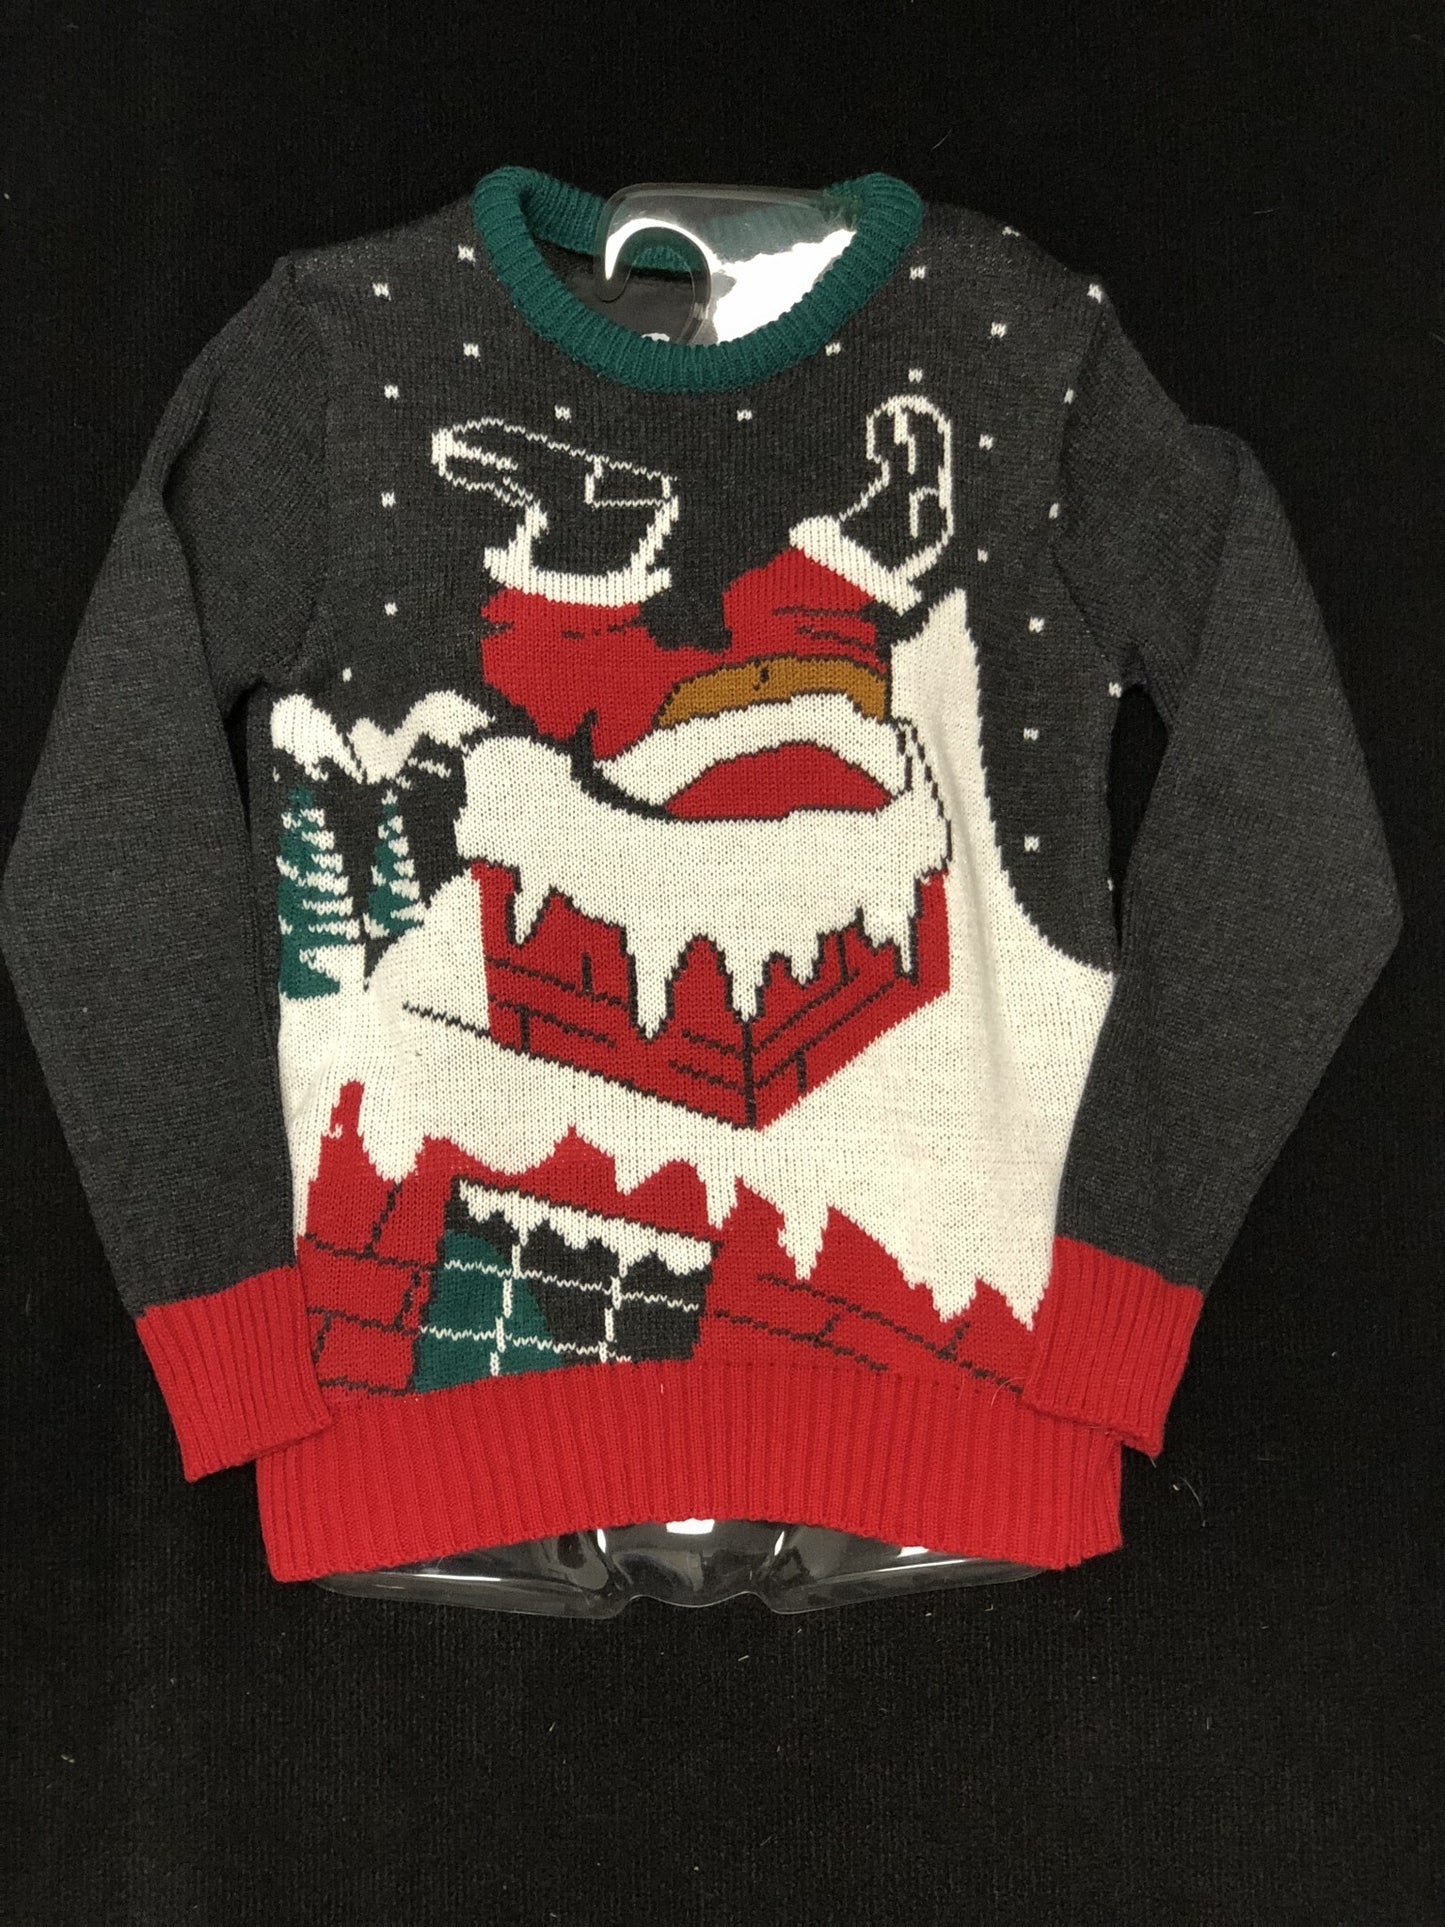 Sweater: Chimney Santa